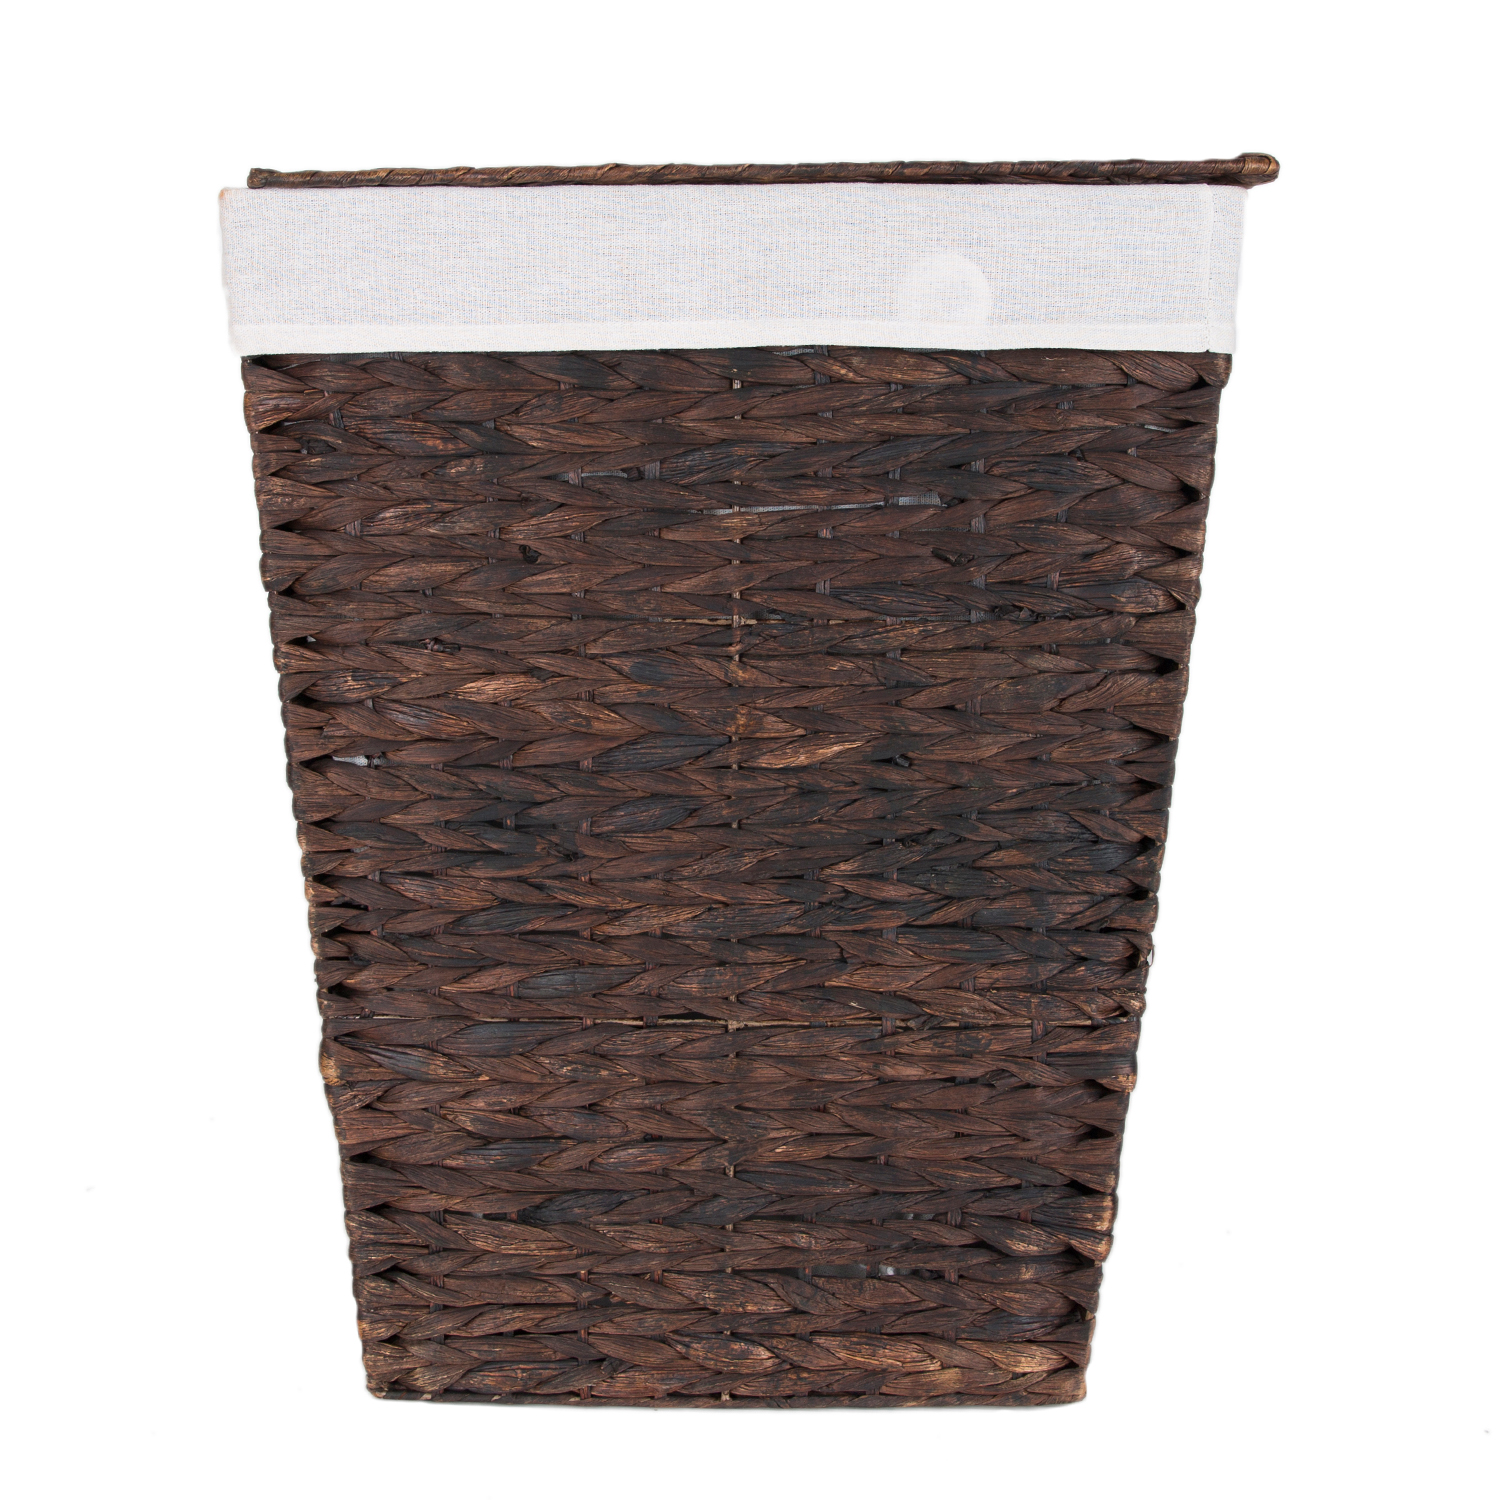 Dikdörtgen Kapaklı Hasır Çamaşır Sepeti (Kumaş İçli) Kahverengi 45 X 58 X 36 Cm